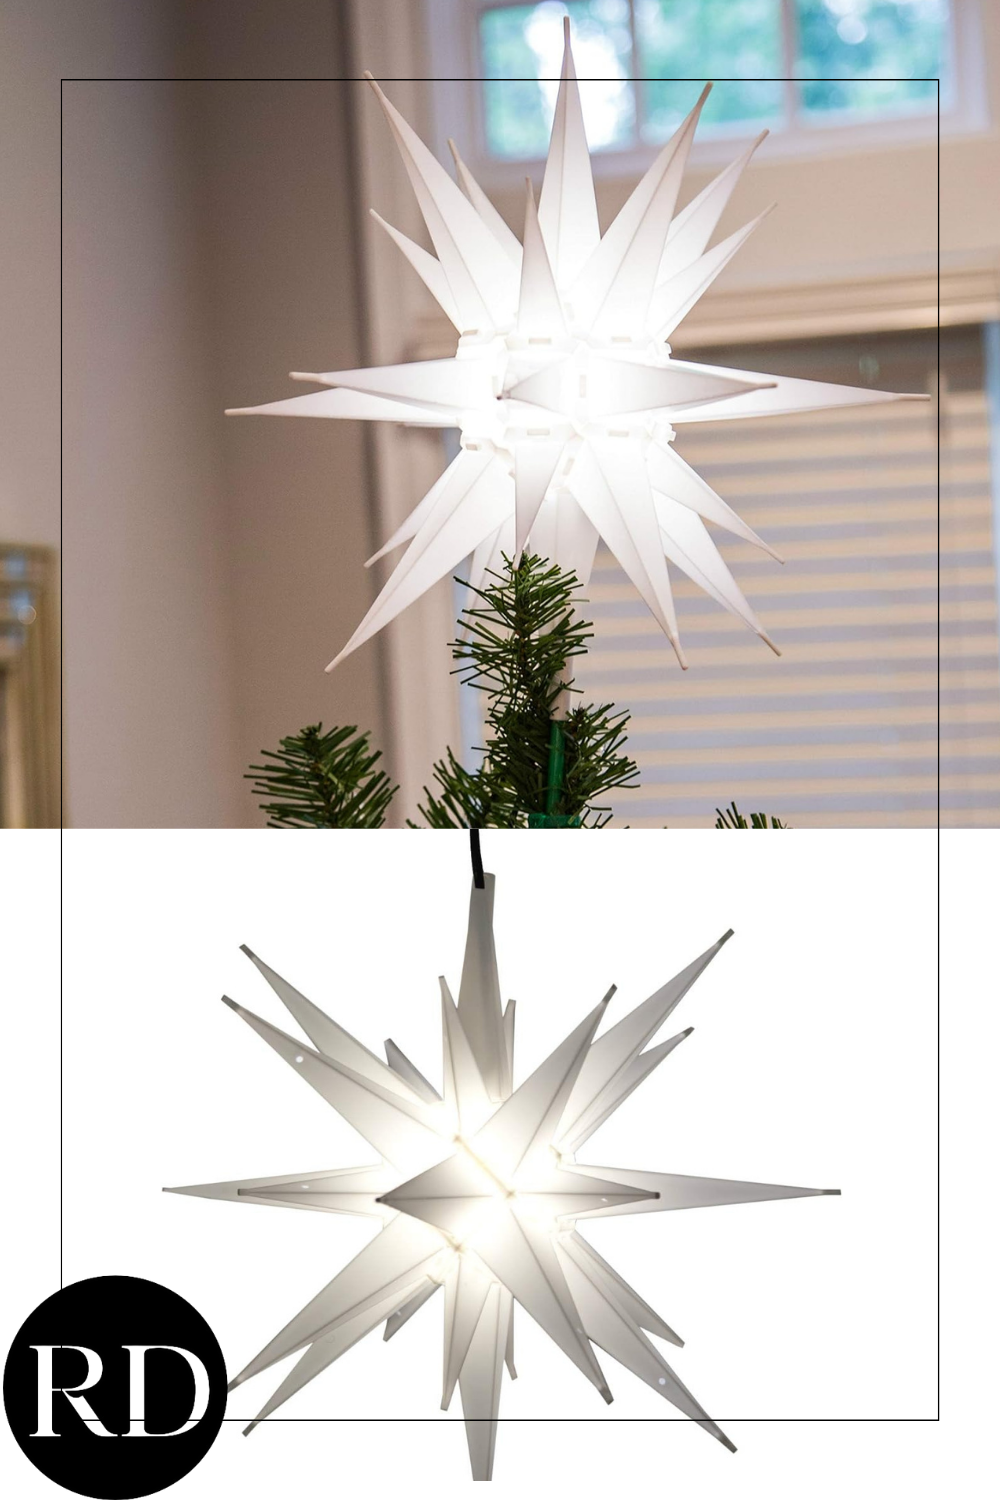 12" LED Moravian Star Tree Topper - Bright White Lighted Christmas Tree Star Topper- Use as a Moravian Star Light, Tree Topper, or an Outdoor Christmas Decoration